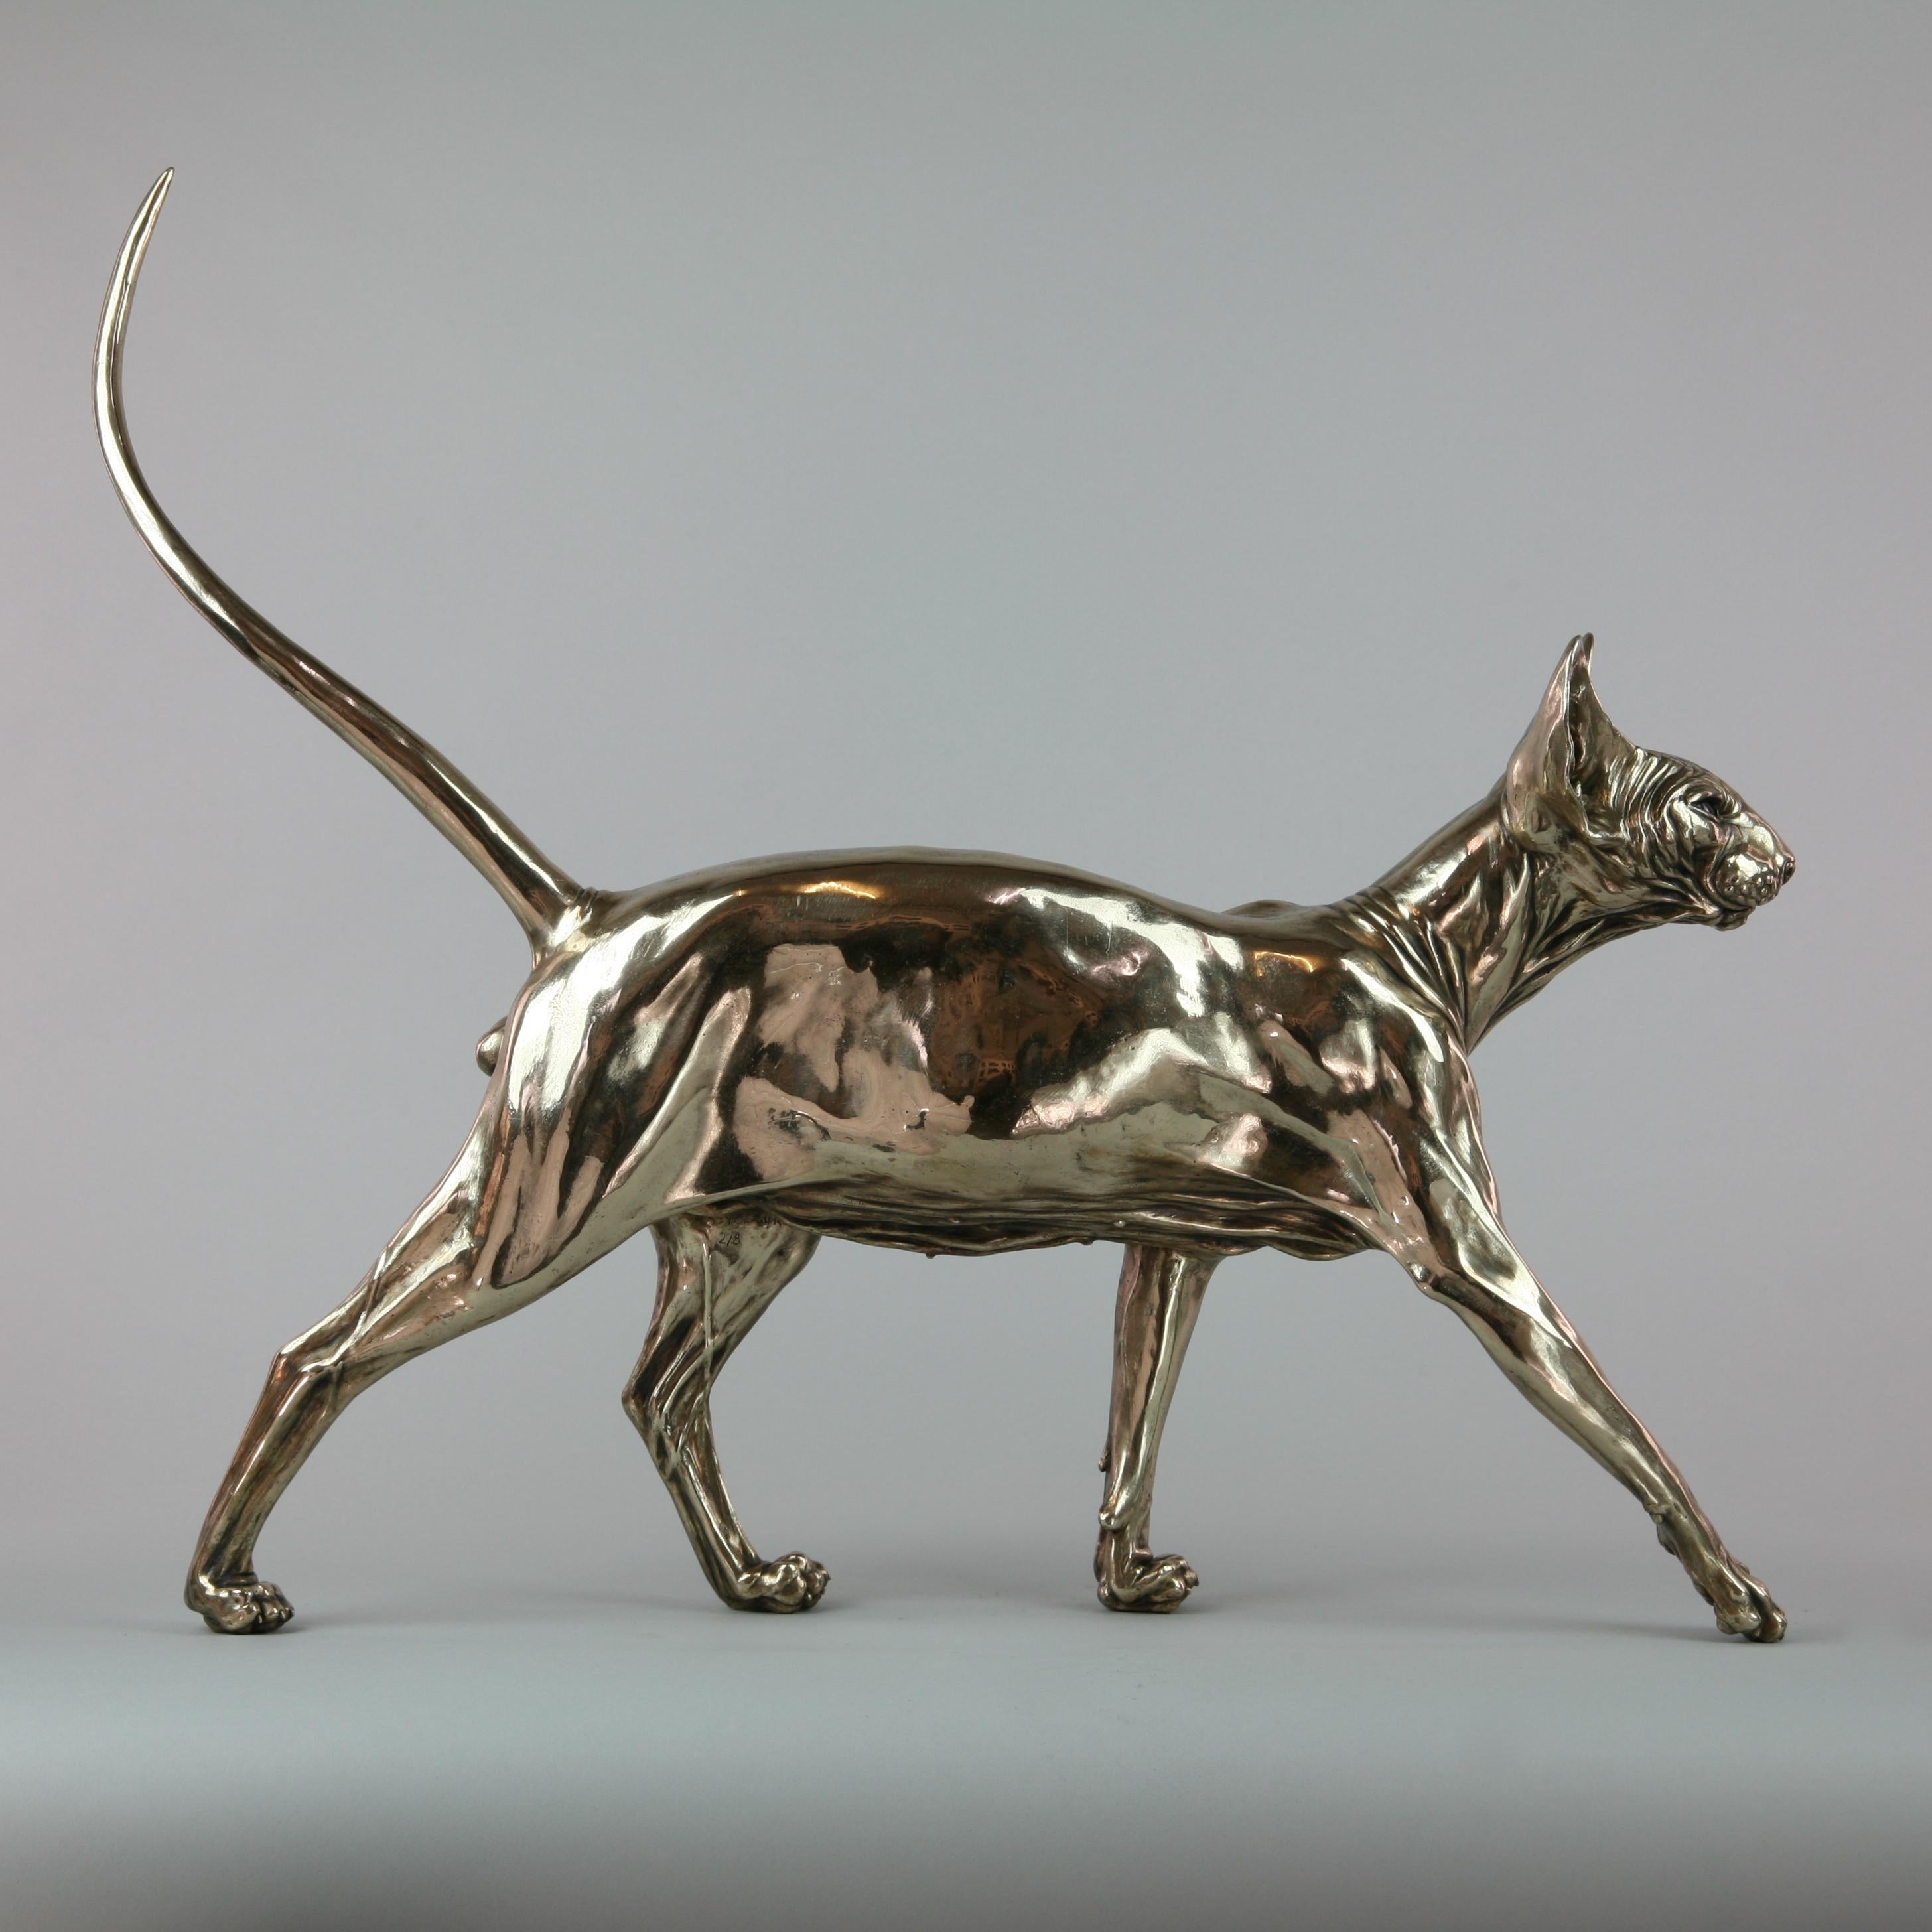 Andrzej Szymczyk Figurative Sculpture - Sphynx Cat II - sculpture wildlife animal limited edition bronze modern marine